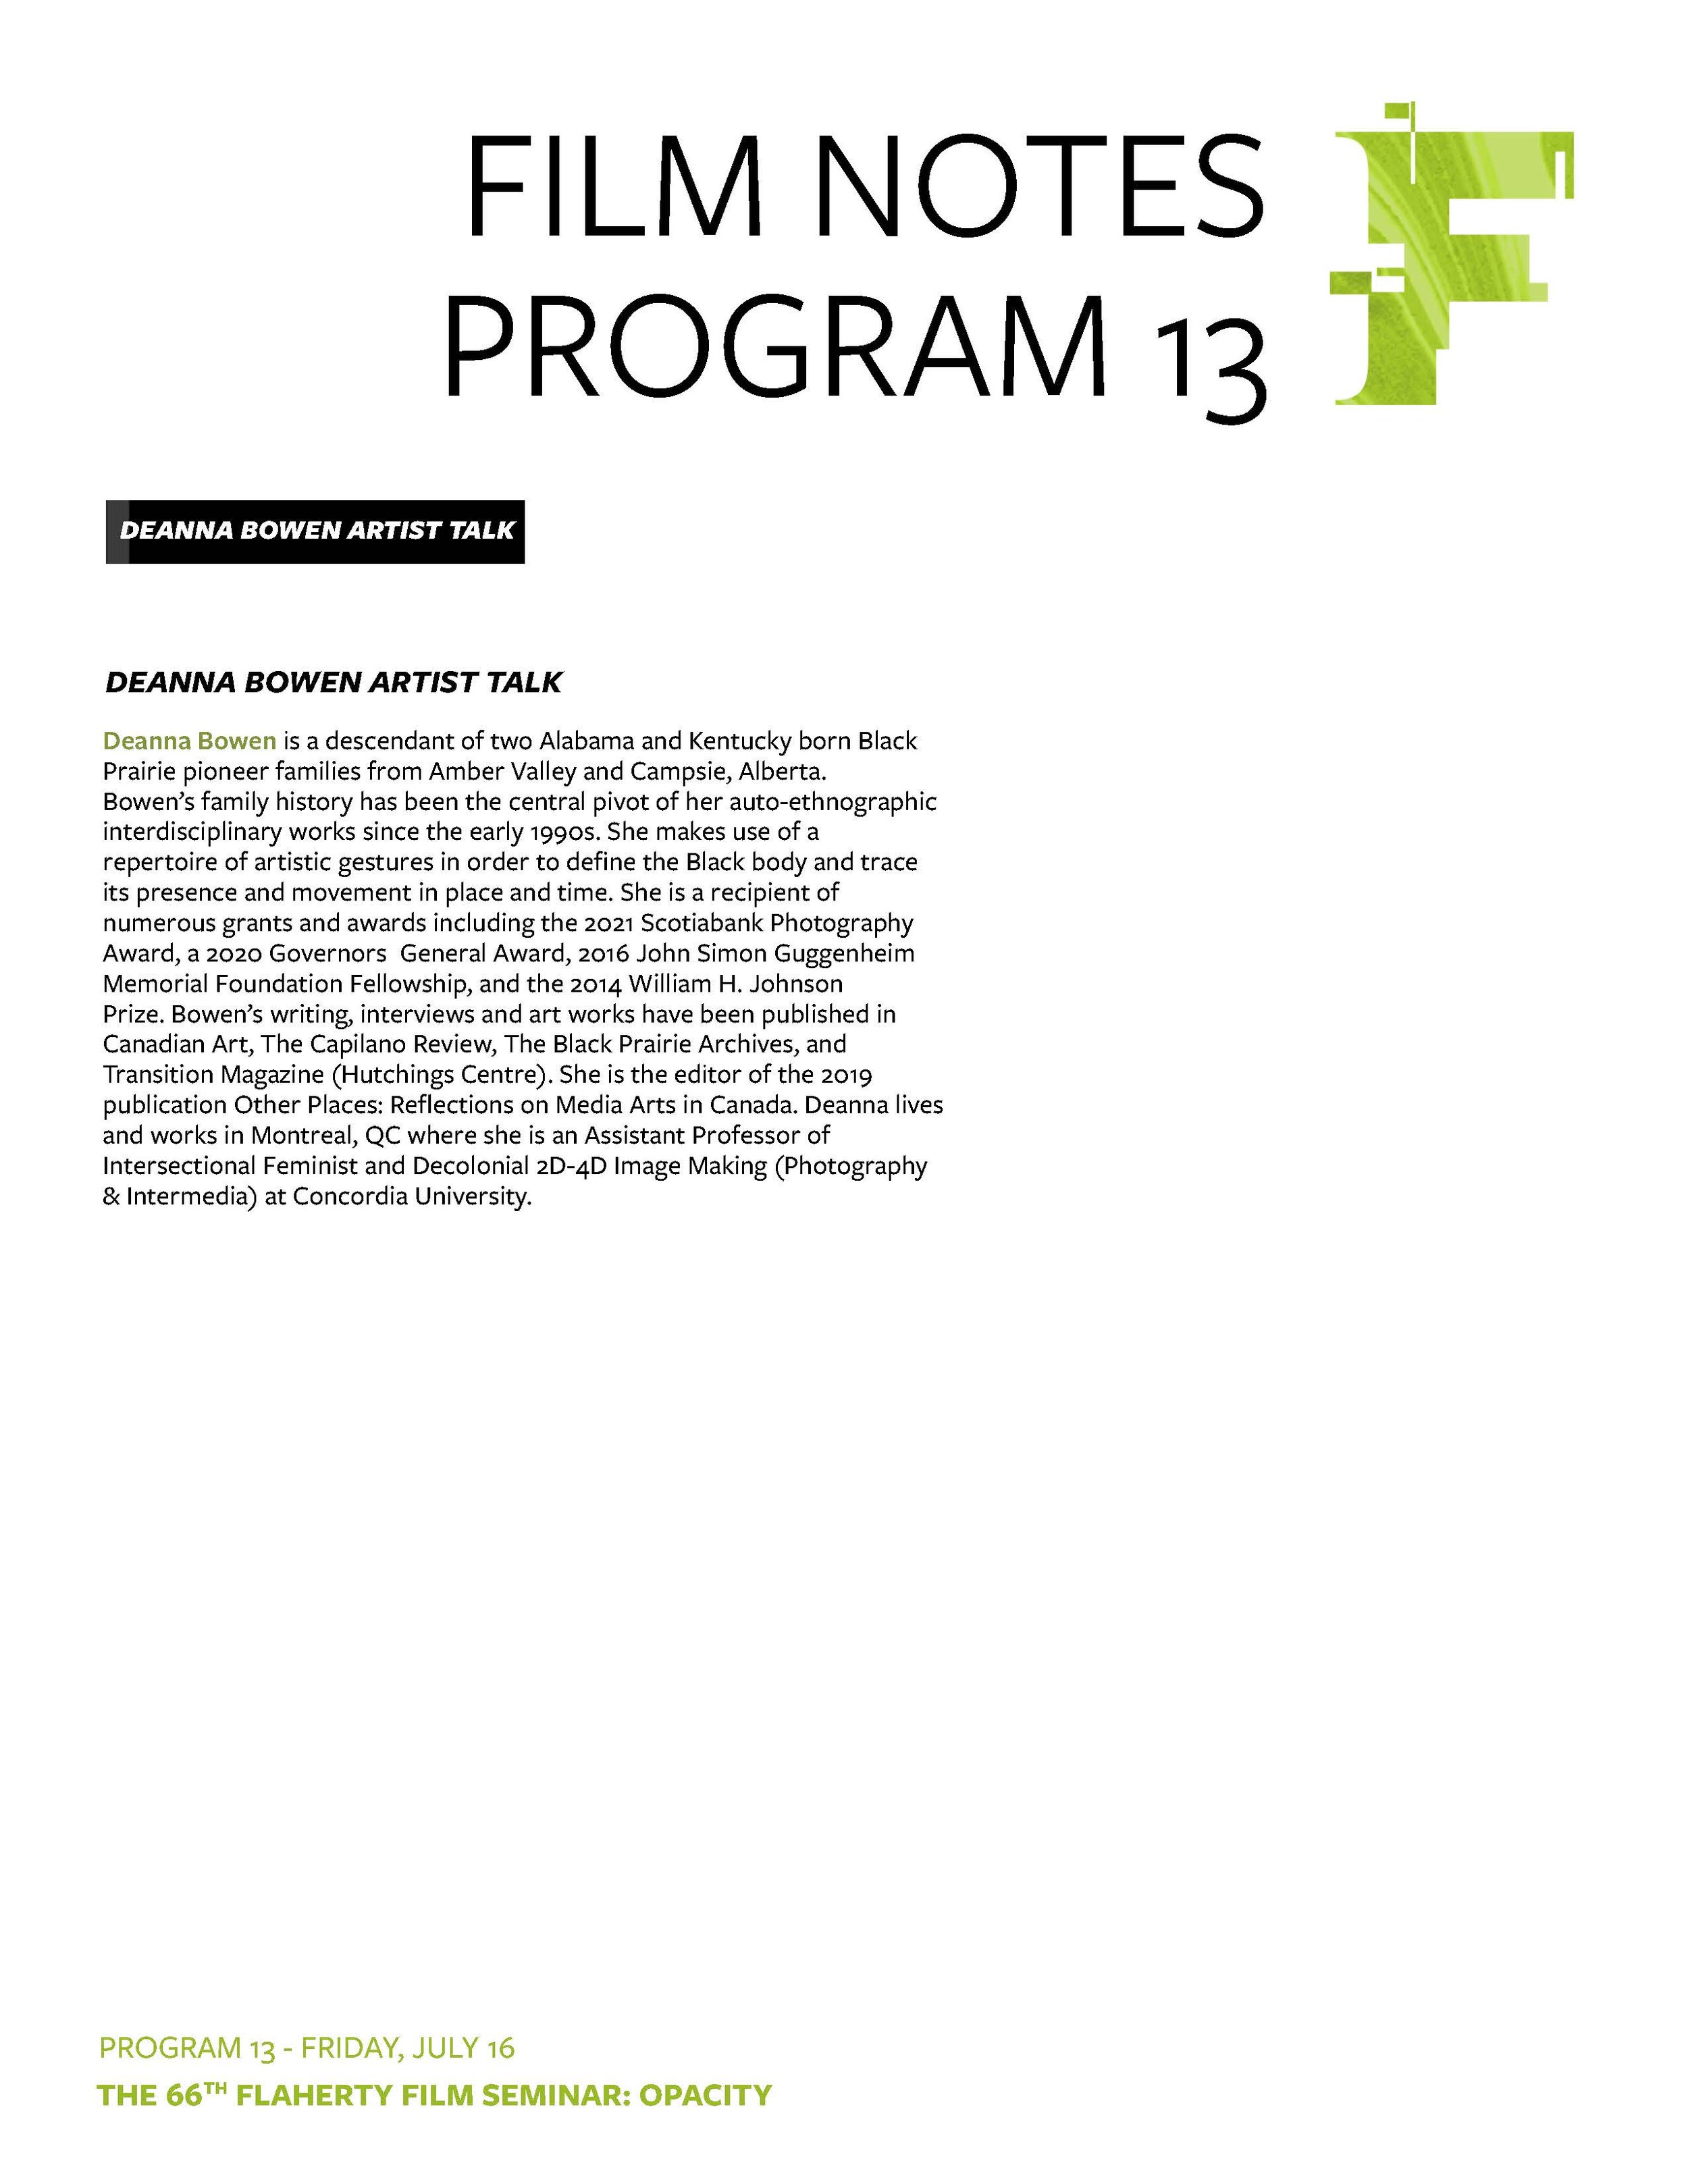 Program 13 Film Notes.jpg